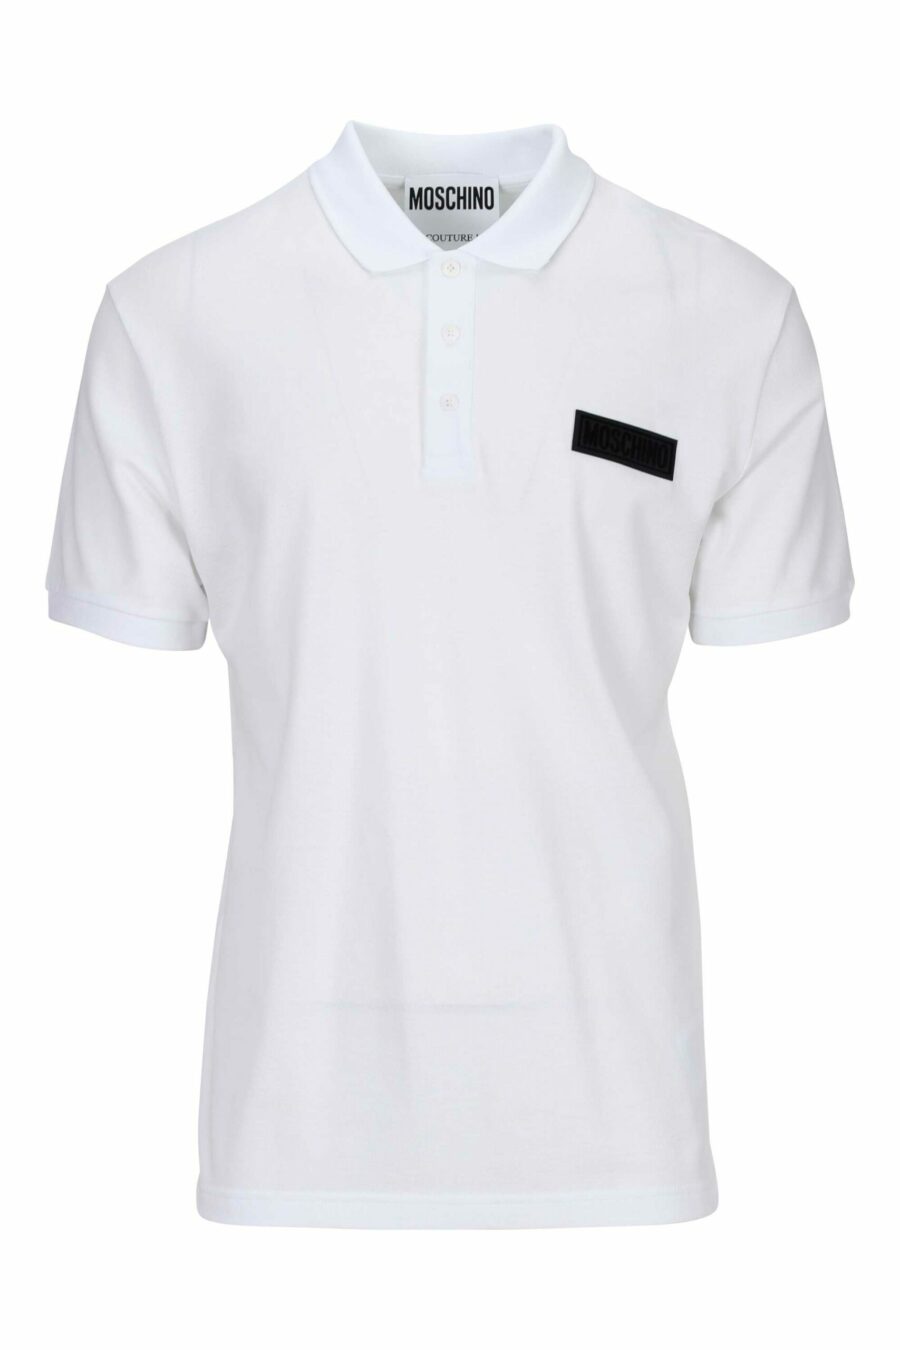 White polo shirt with black mini-logo label - 667113402154 scaled